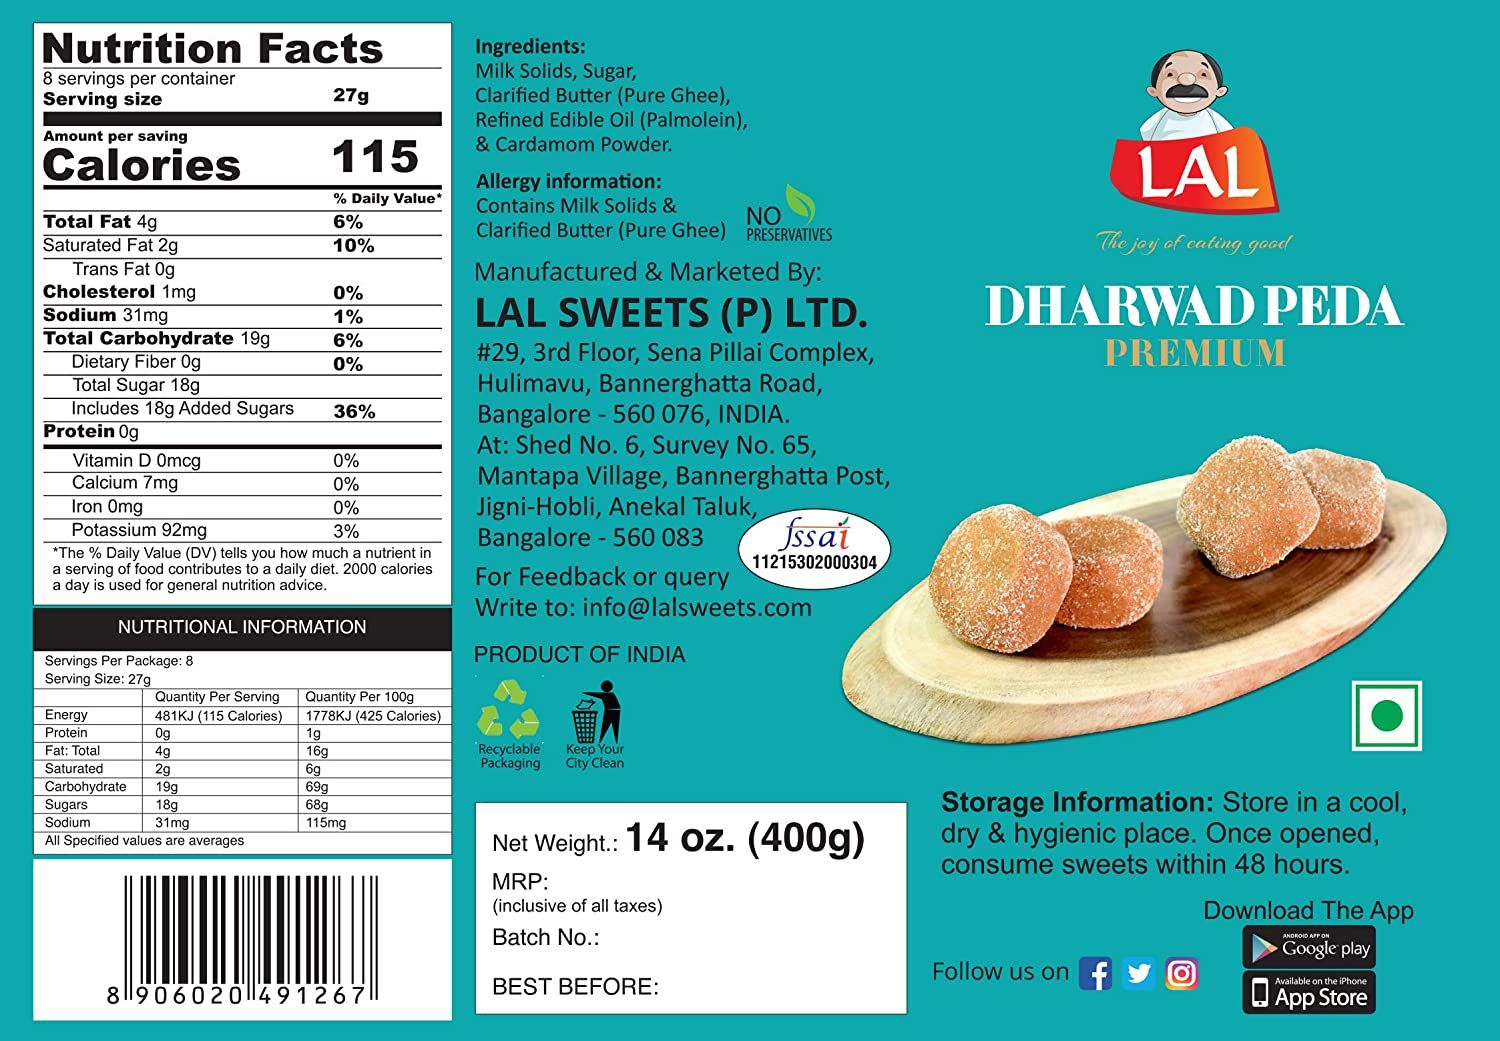 Lal Sweets Dharwad Peda Image